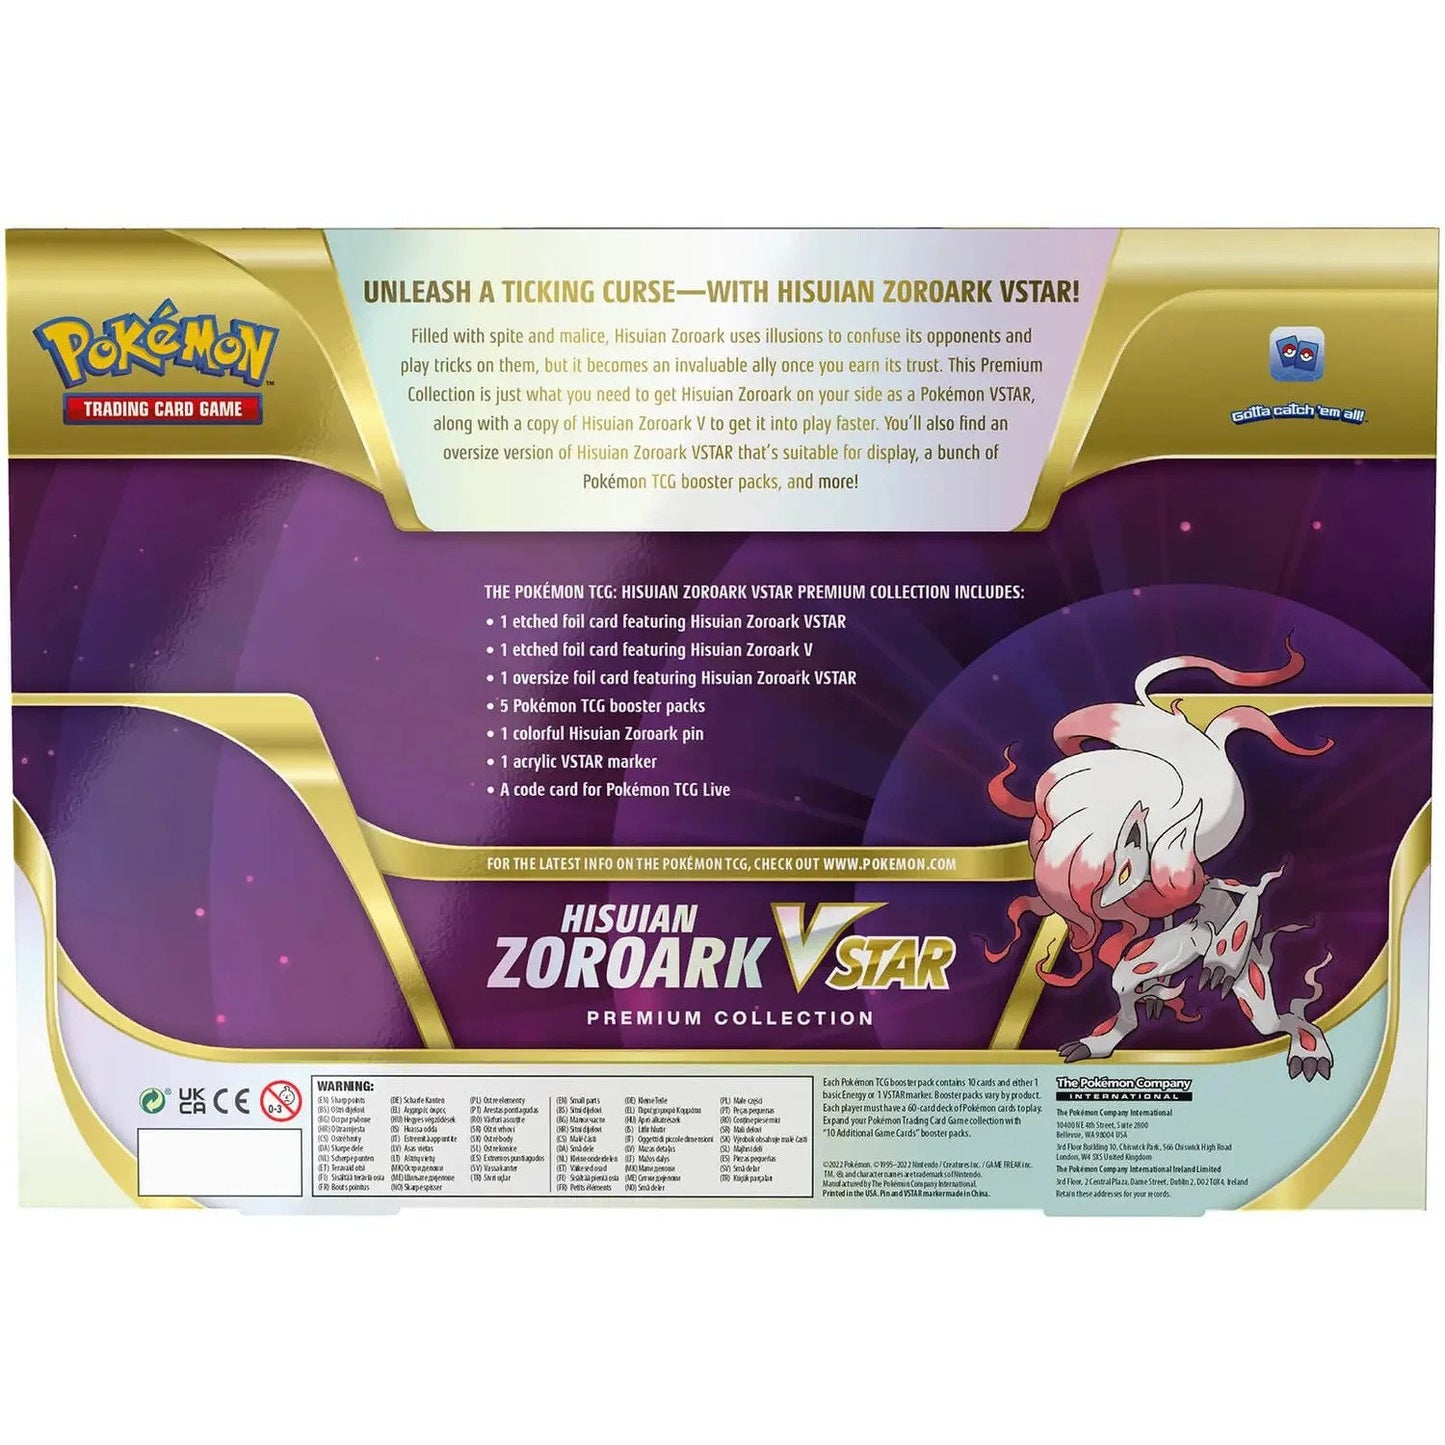 Pokemon Hisuian Zoroak VSTAR Premium Collection Contents